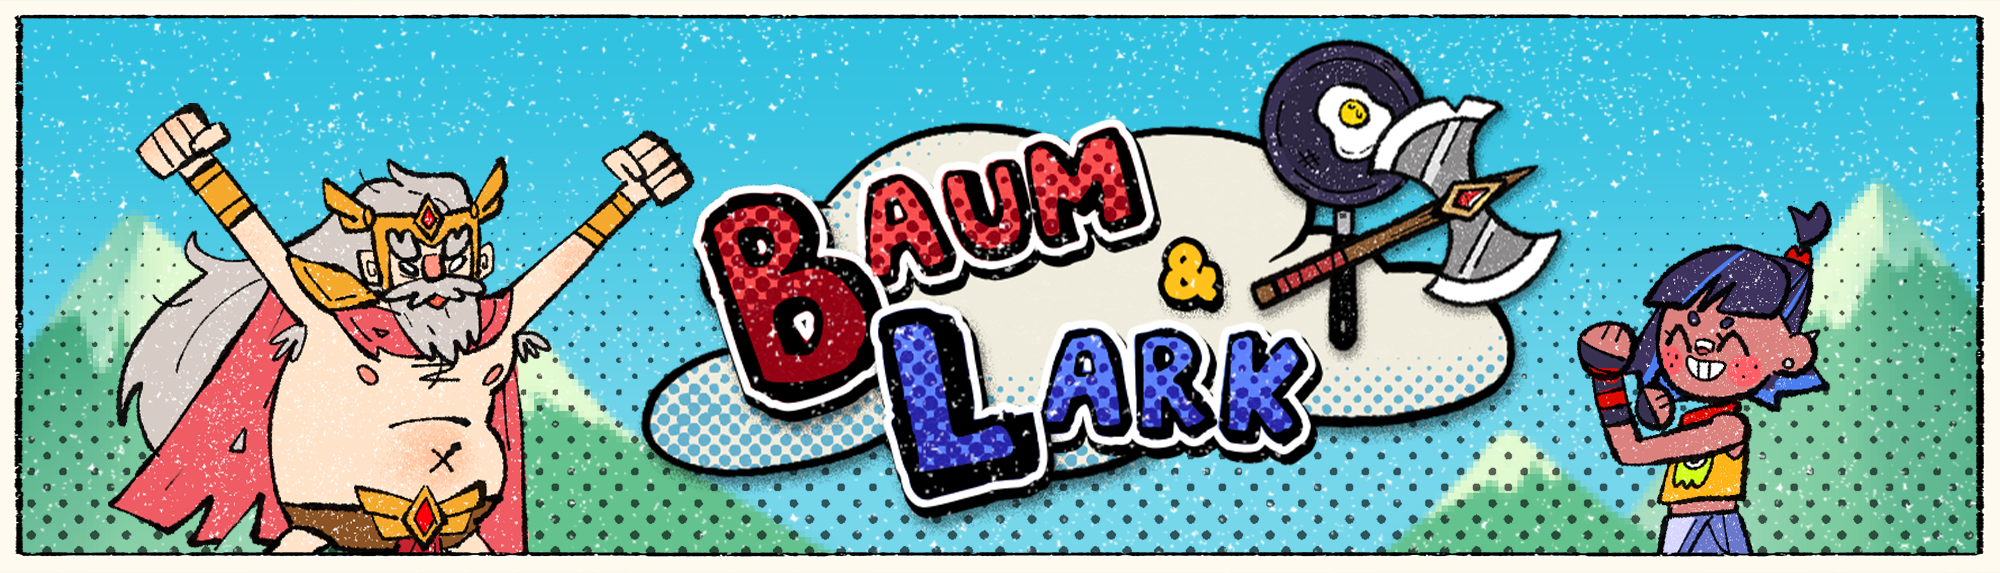 Baum & Lark Demo Launch